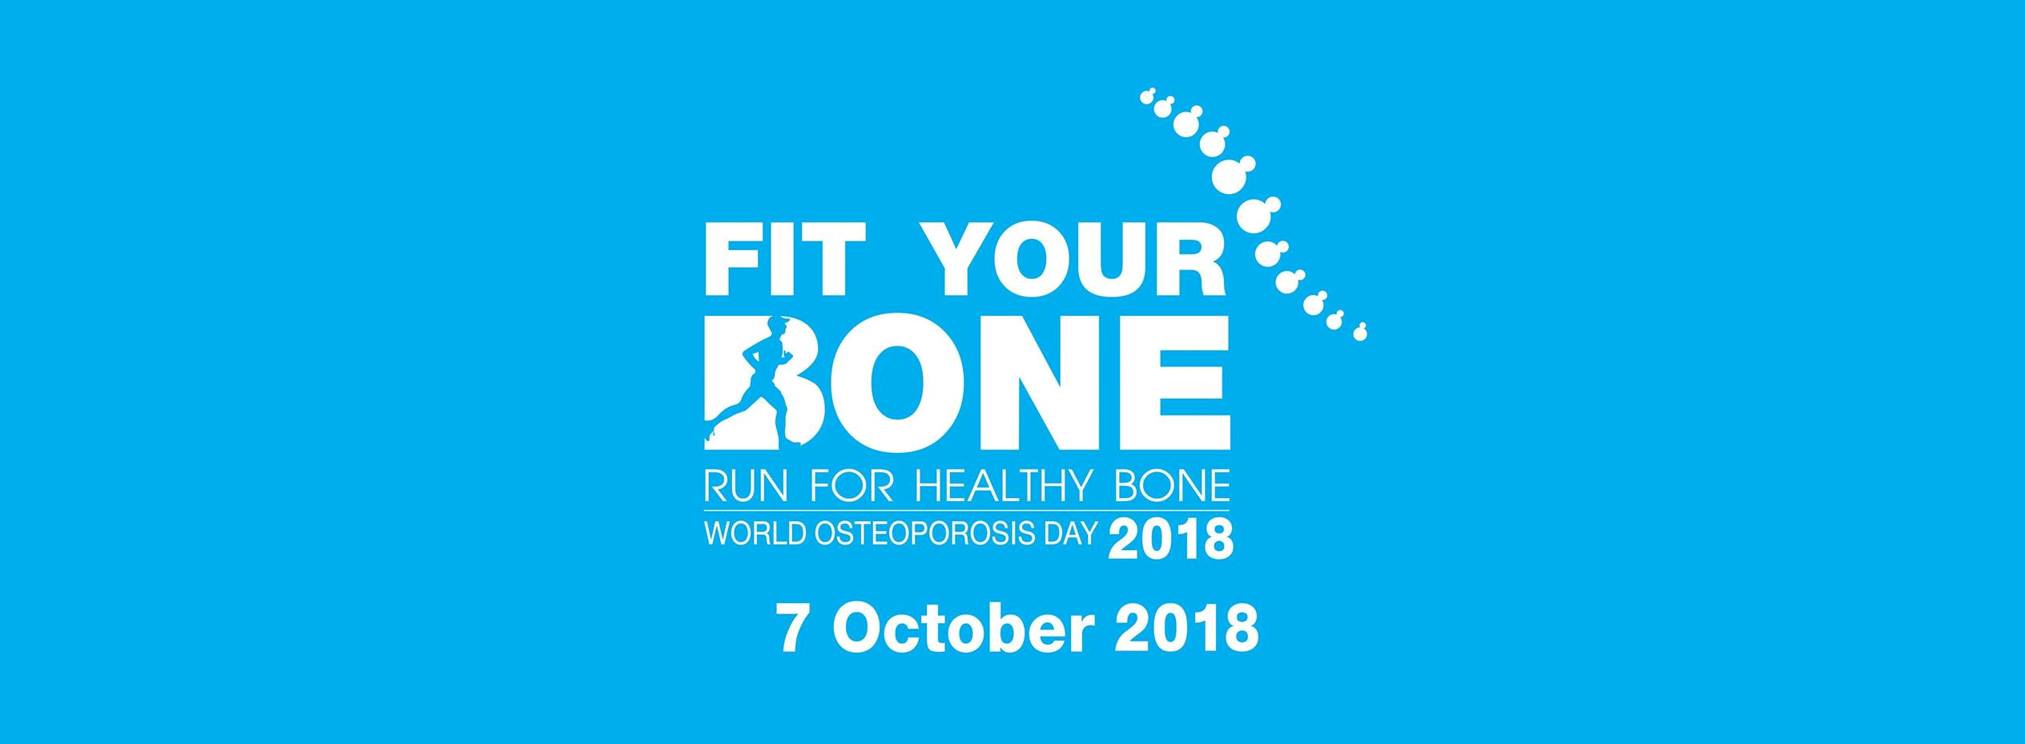 Fit Your Bone Run For Healthy Bone 2018